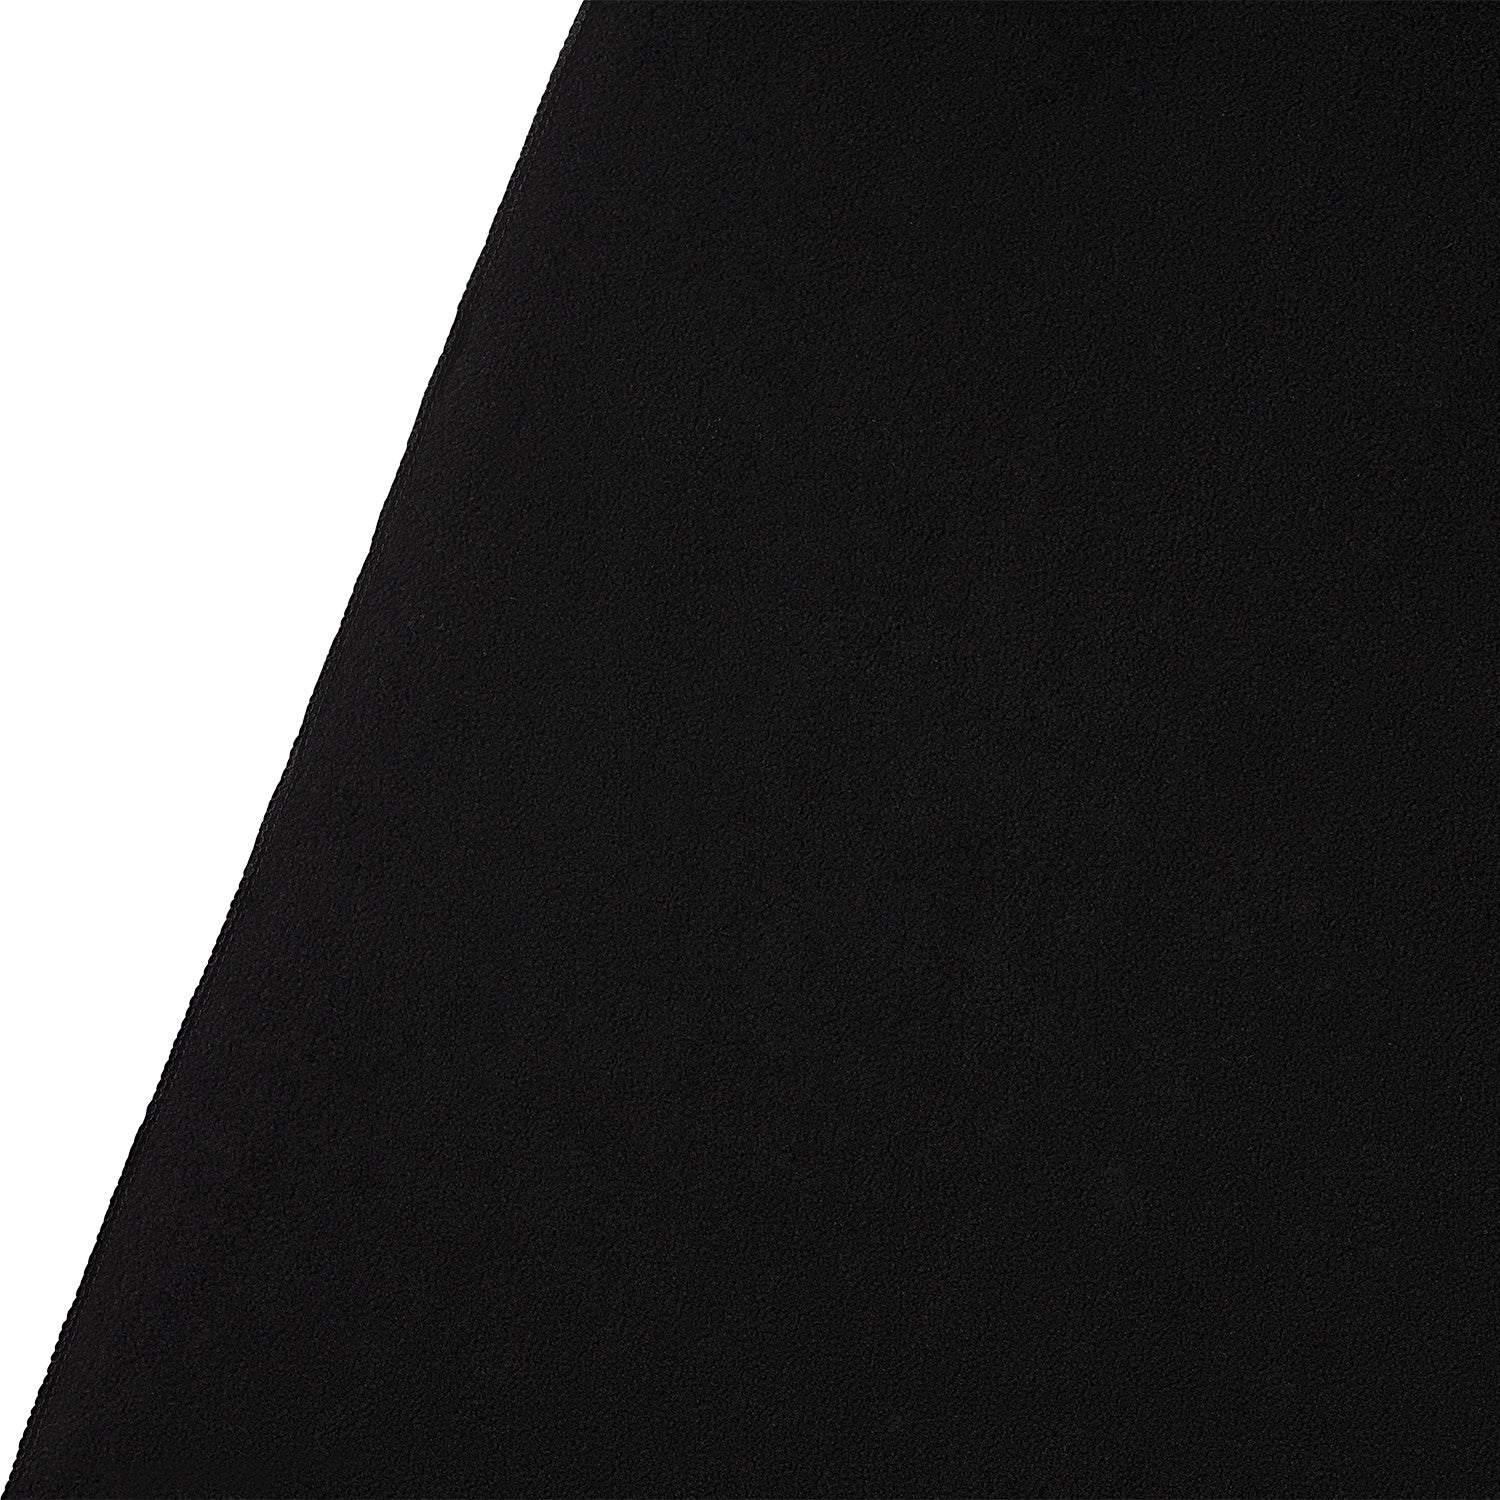 Wrinkle-Resistant Backdrop - Rich Black (9' x 20')